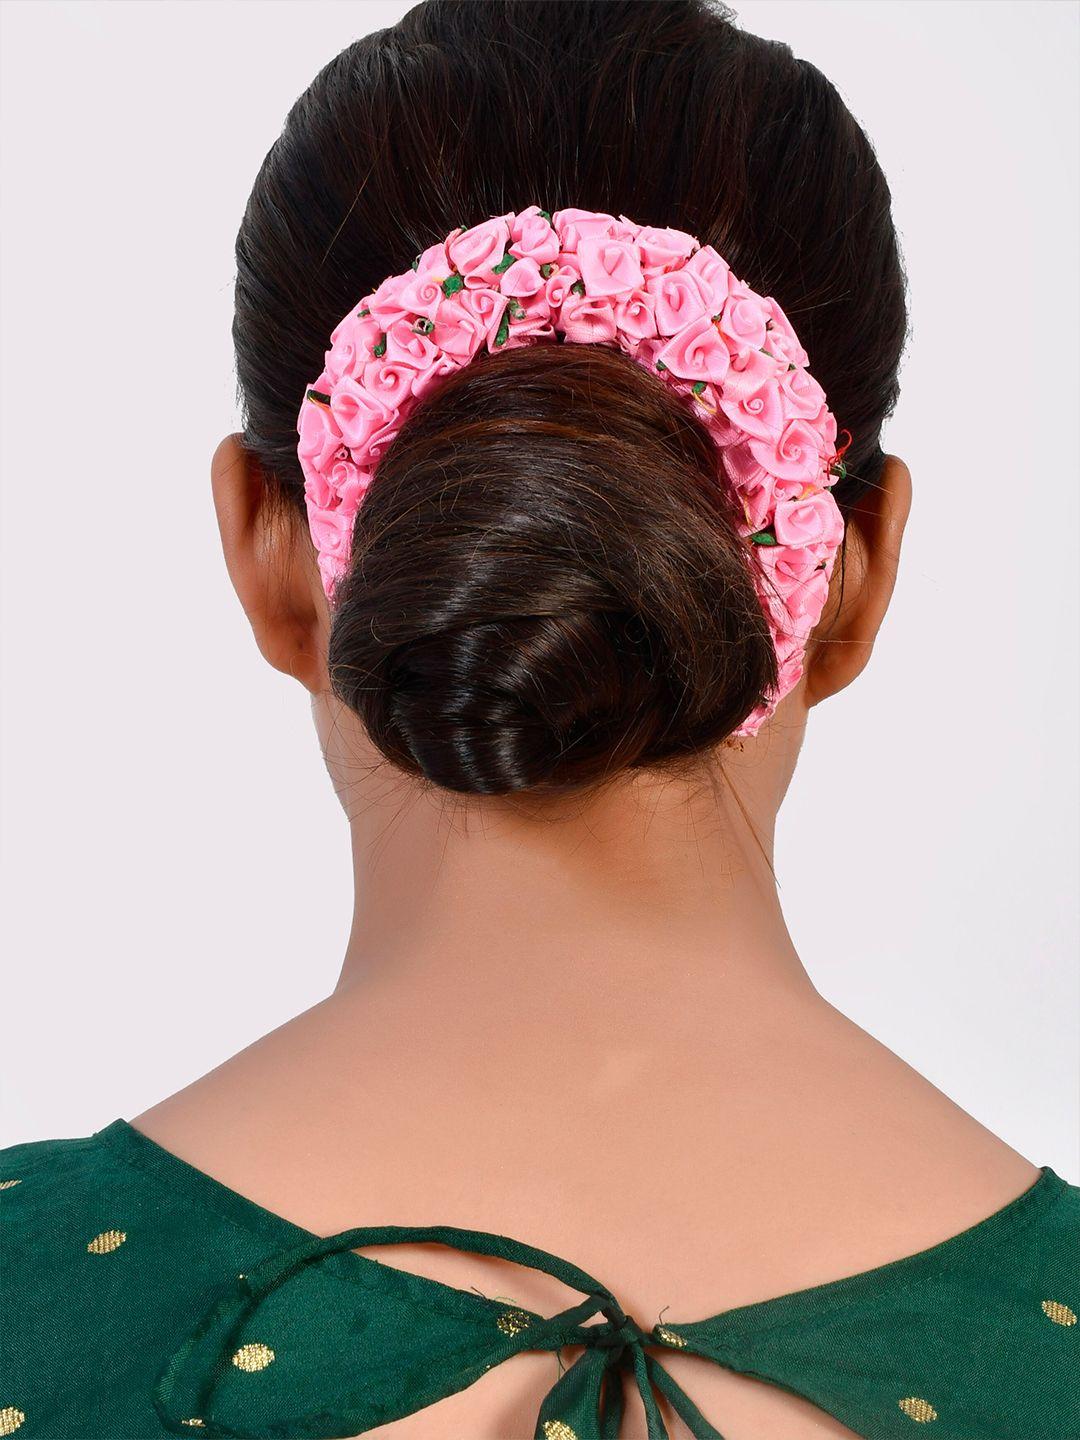 silvermerc designs women pink & green embellished hair bun accessory